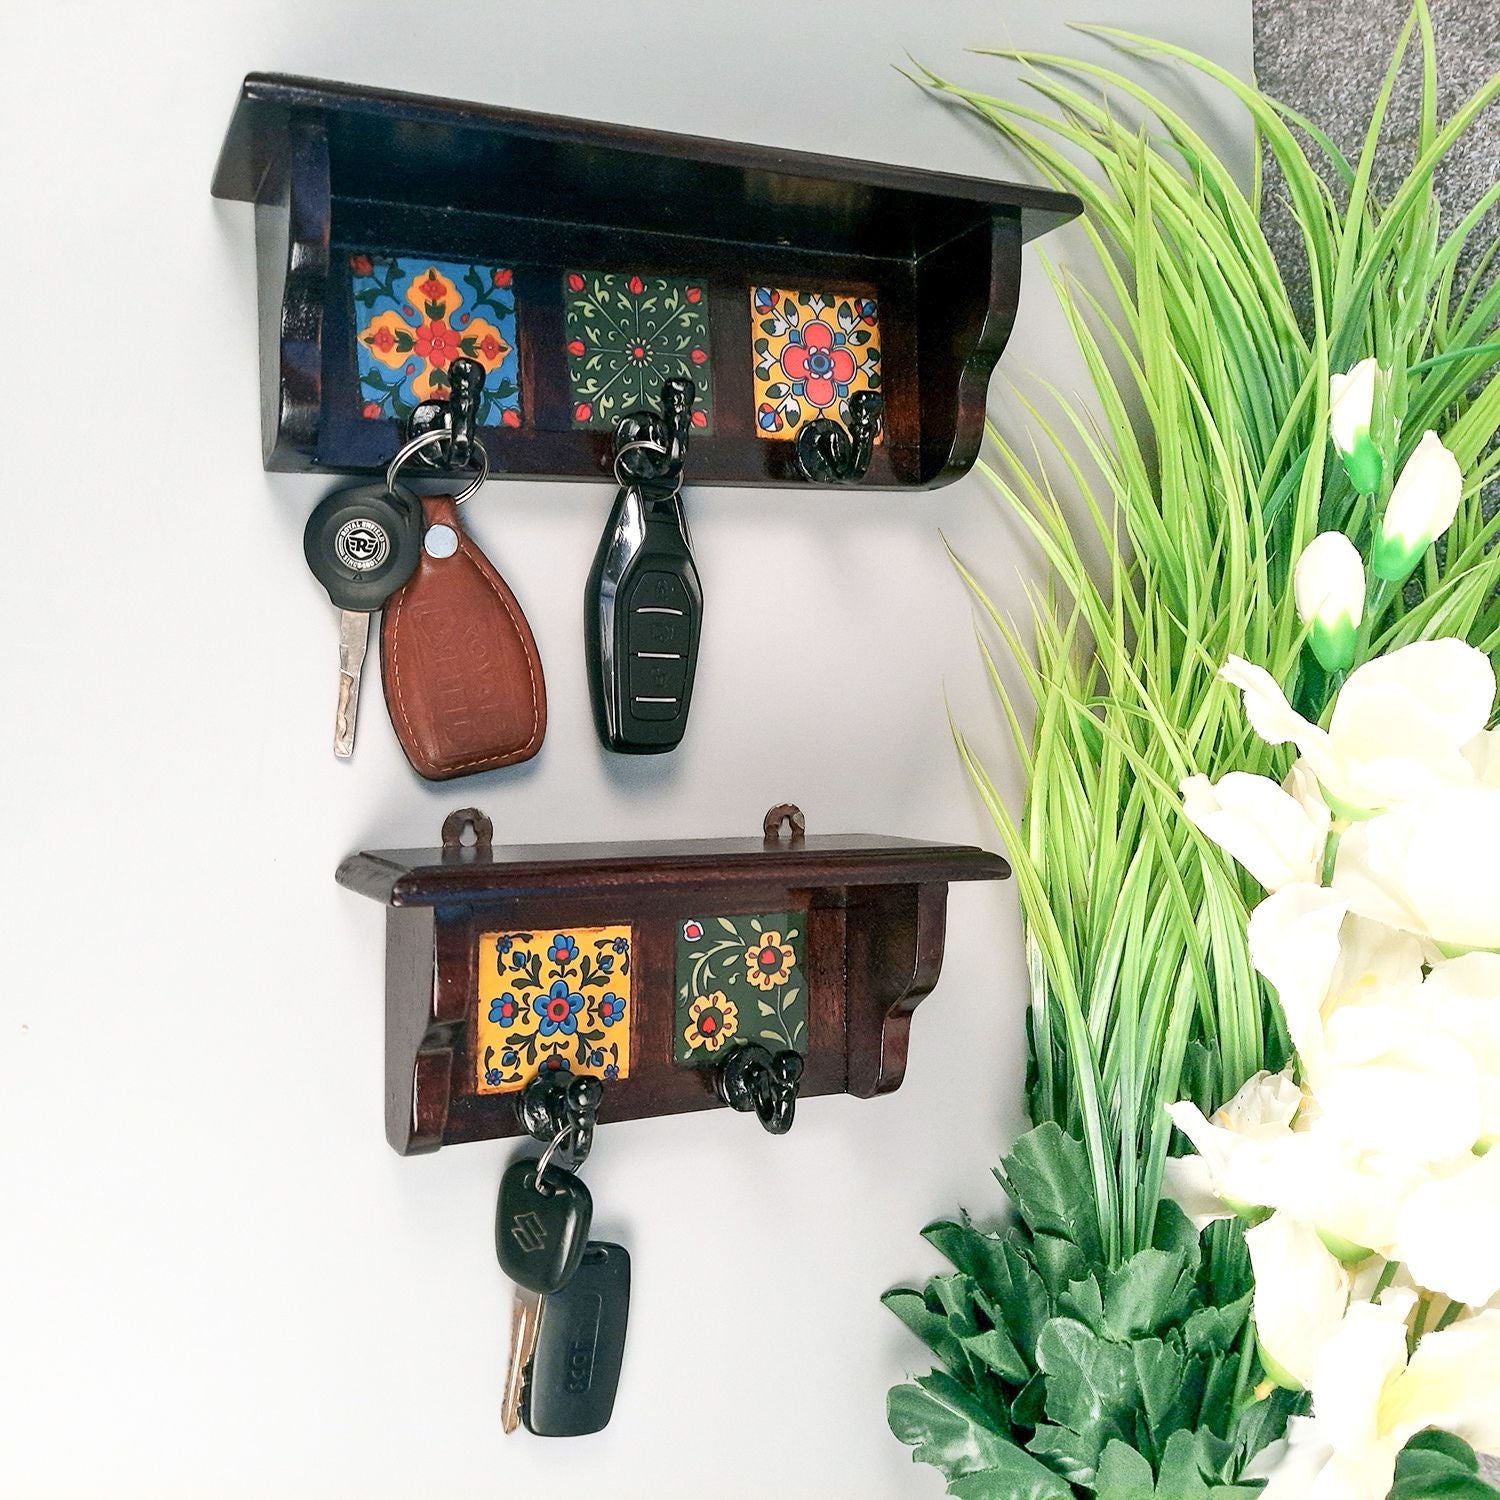 Wall Key Hooks With Wooden Shelf - Wall Mount | Floating Shelves For Decorating Showpieces, Vases, Candle Holders & Books | Key Holder Organiser - Home, Entrance, Office Decor & Gifts - Set of 2 - Apkamart